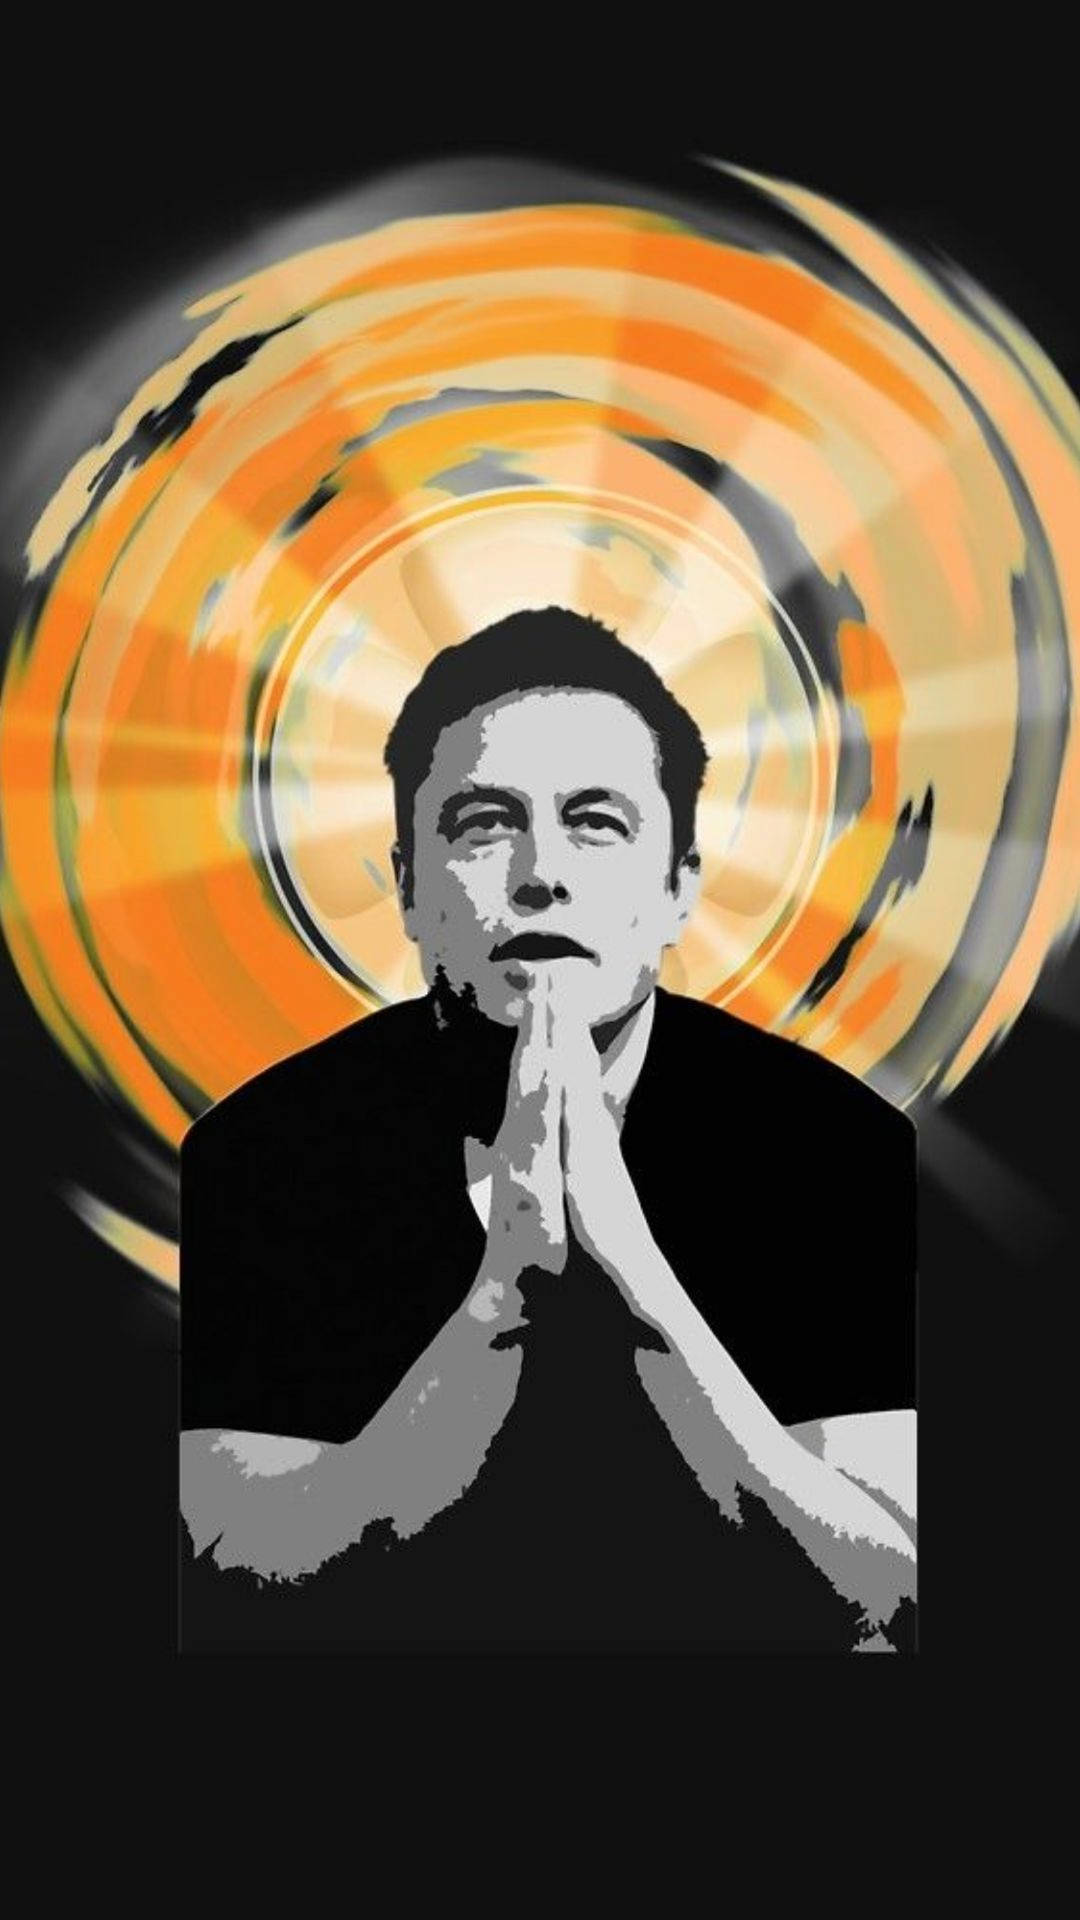 Caption: Visionary Innovator - Elon Musk Fan Art Background